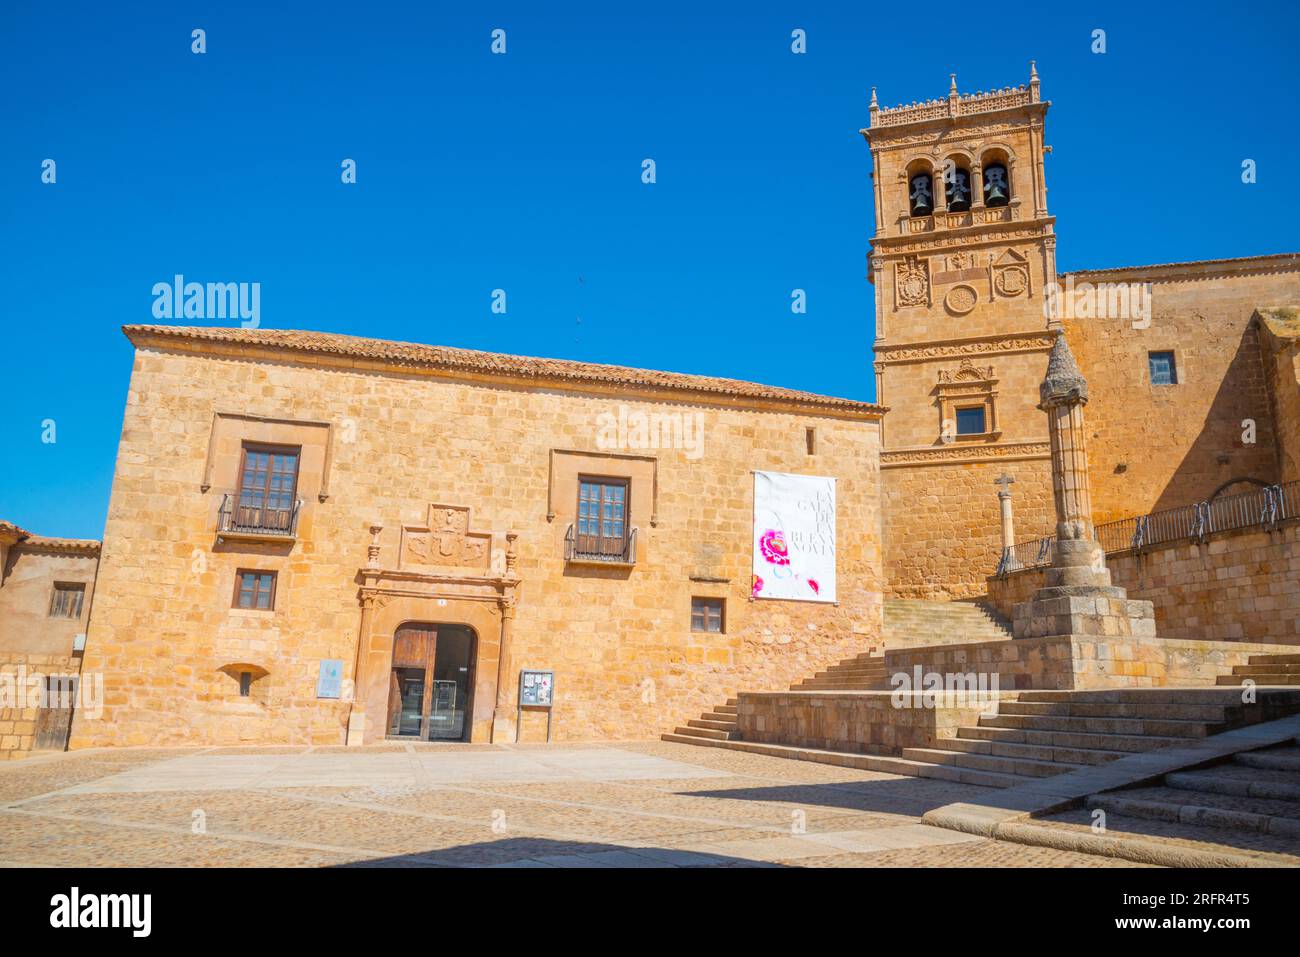 Musée des costumes populaires. Plaza Mayor, Moron de Almazan, province de Soria, Castilla Leon, Espagne. Banque D'Images